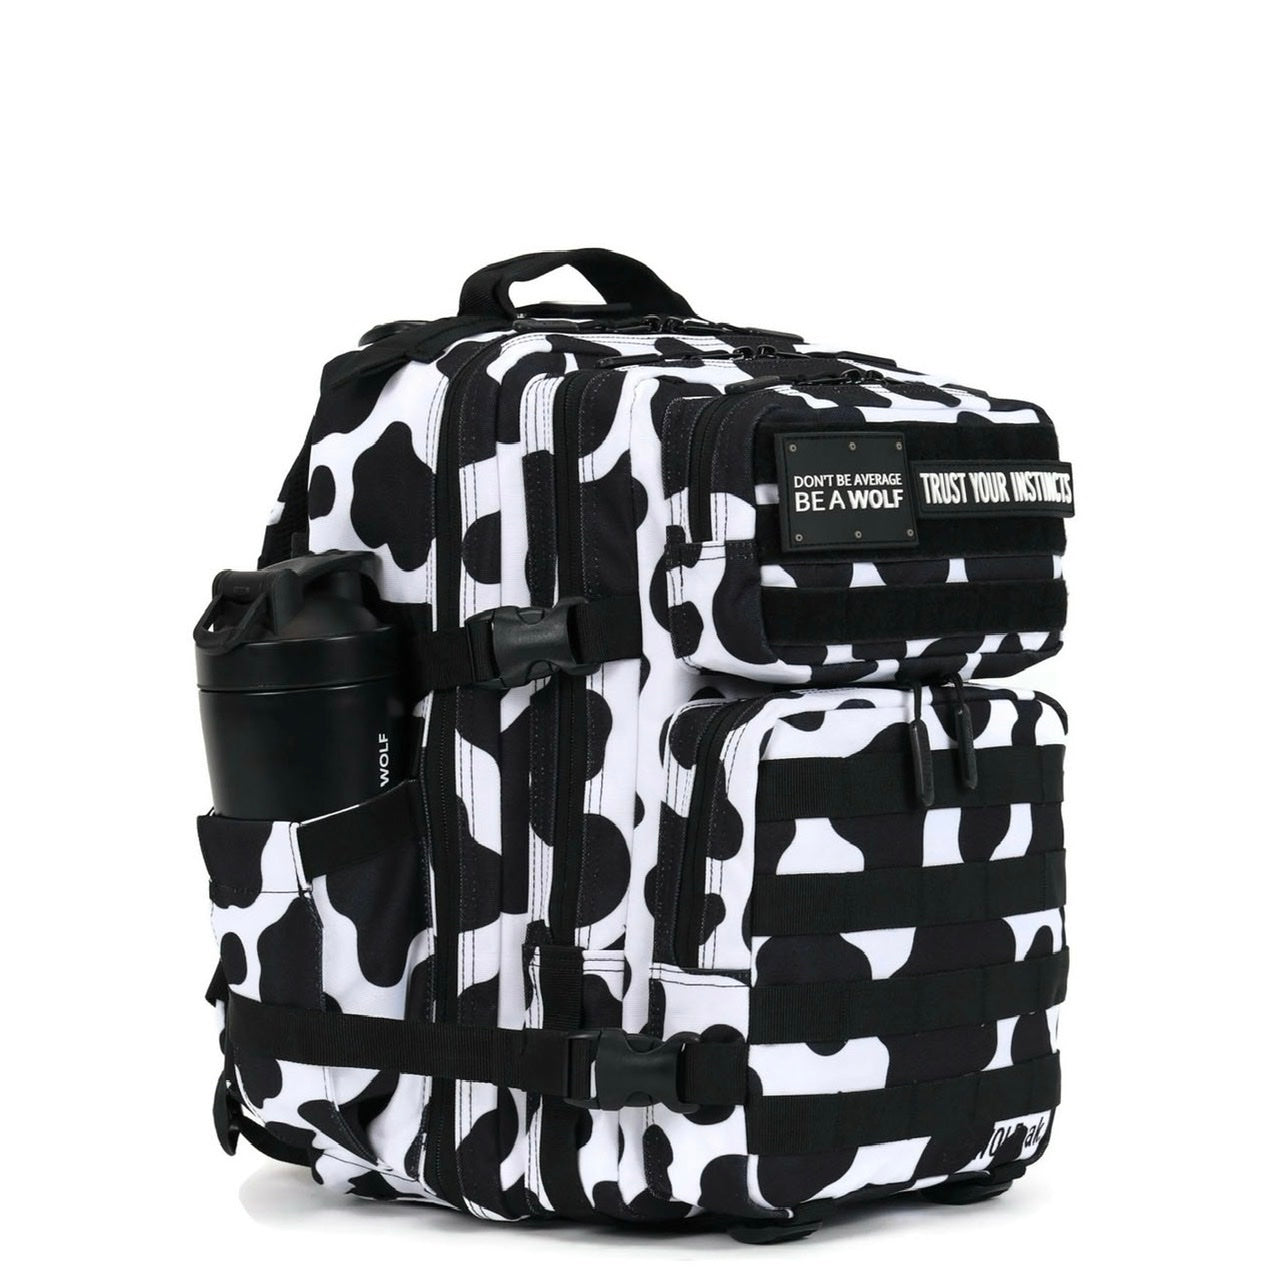 25L Backpack Black White Cow